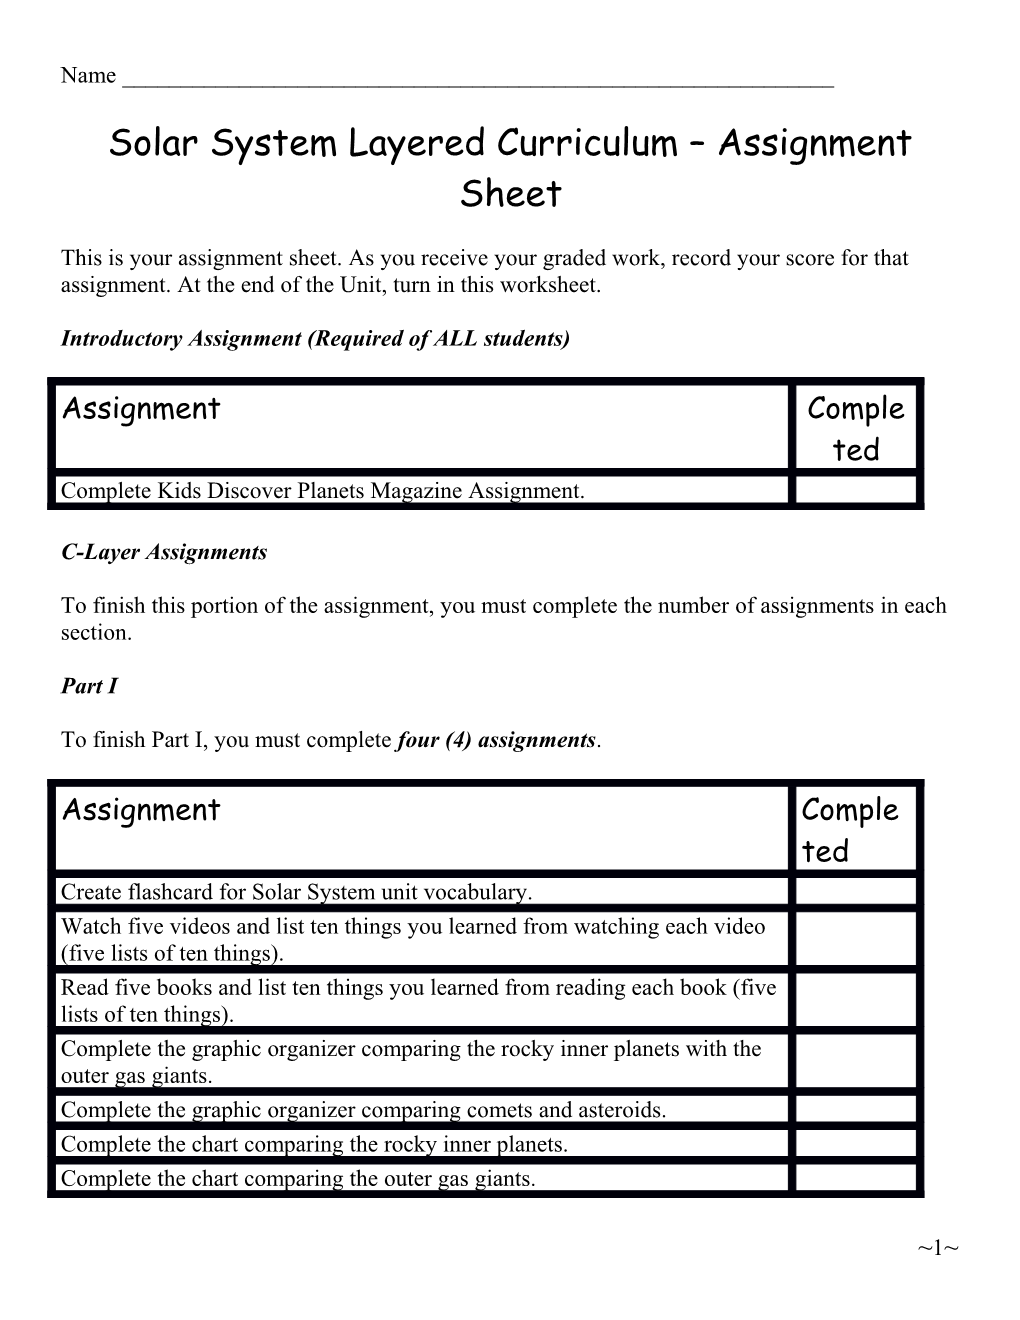 Solar System Layered Curriculum Assignment Sheet